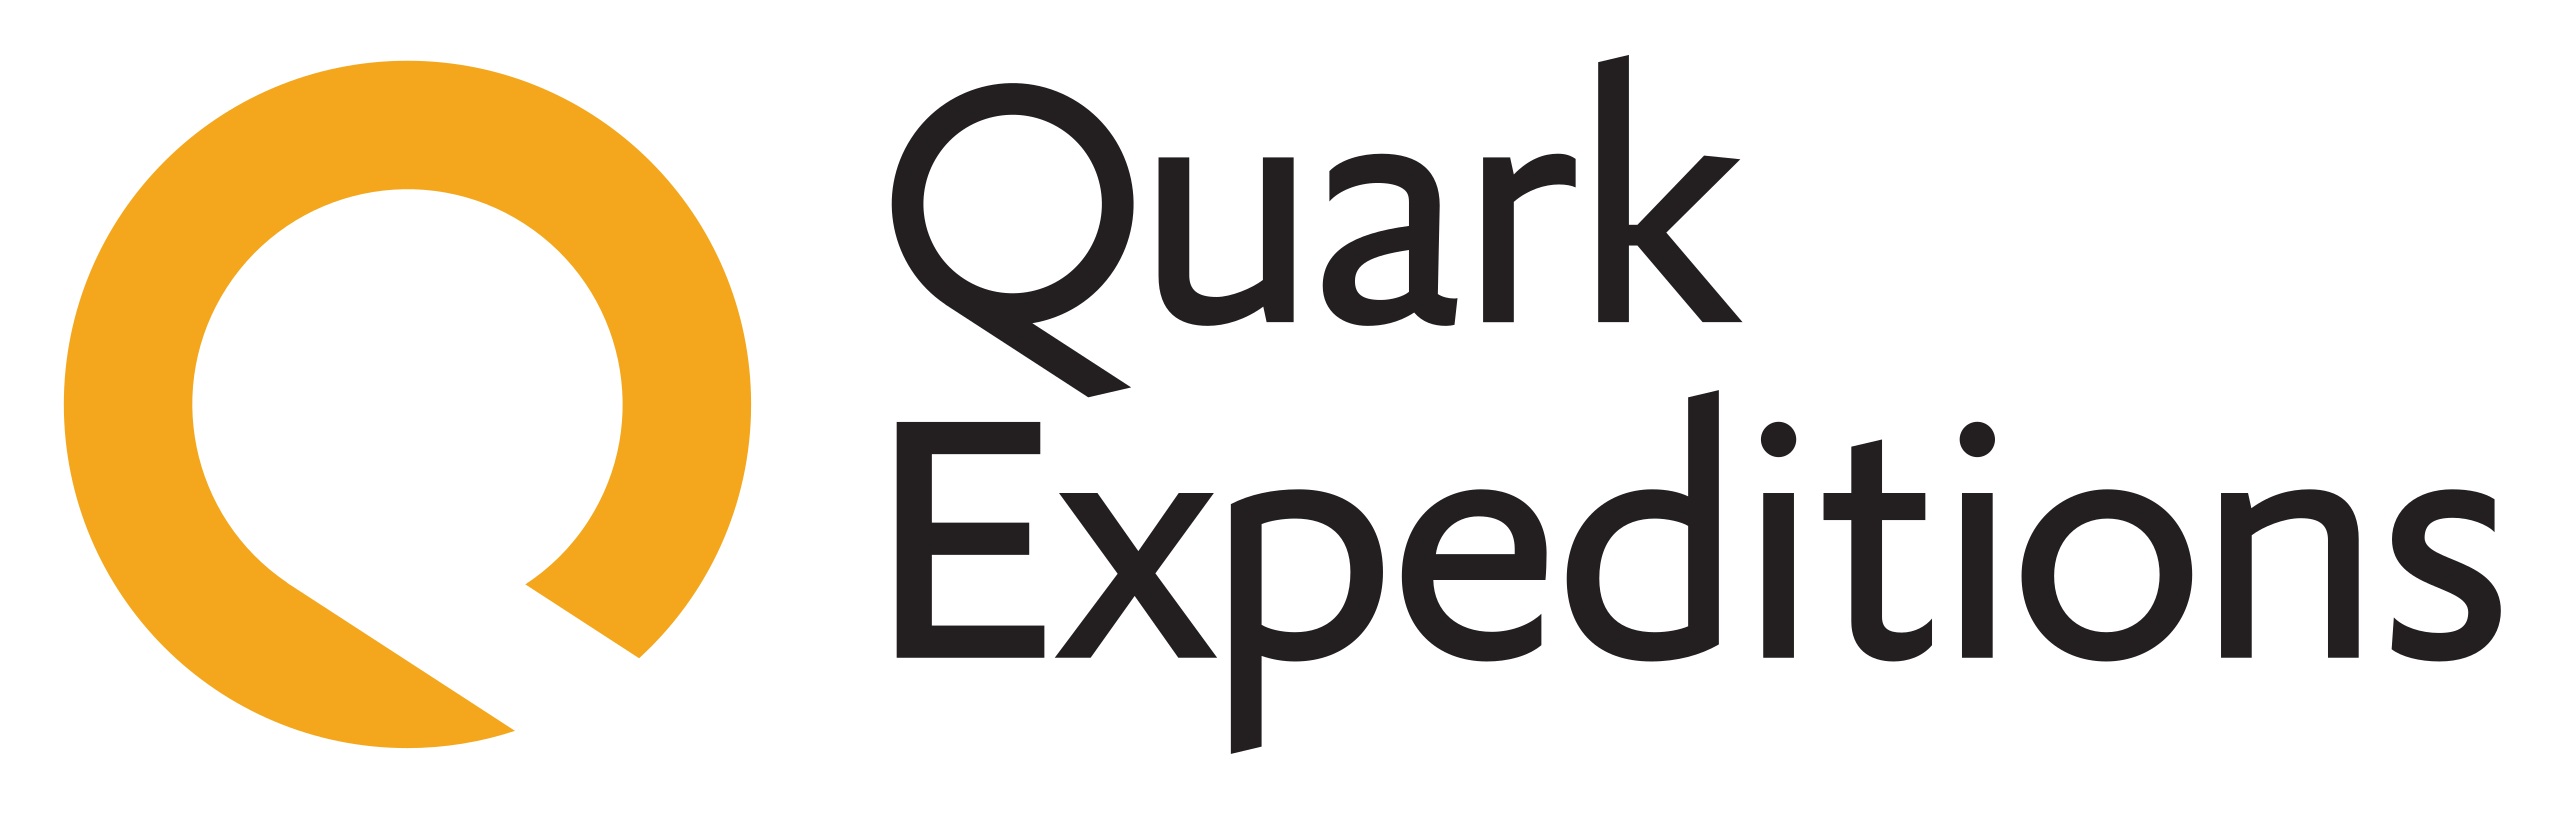 Quark expeditions